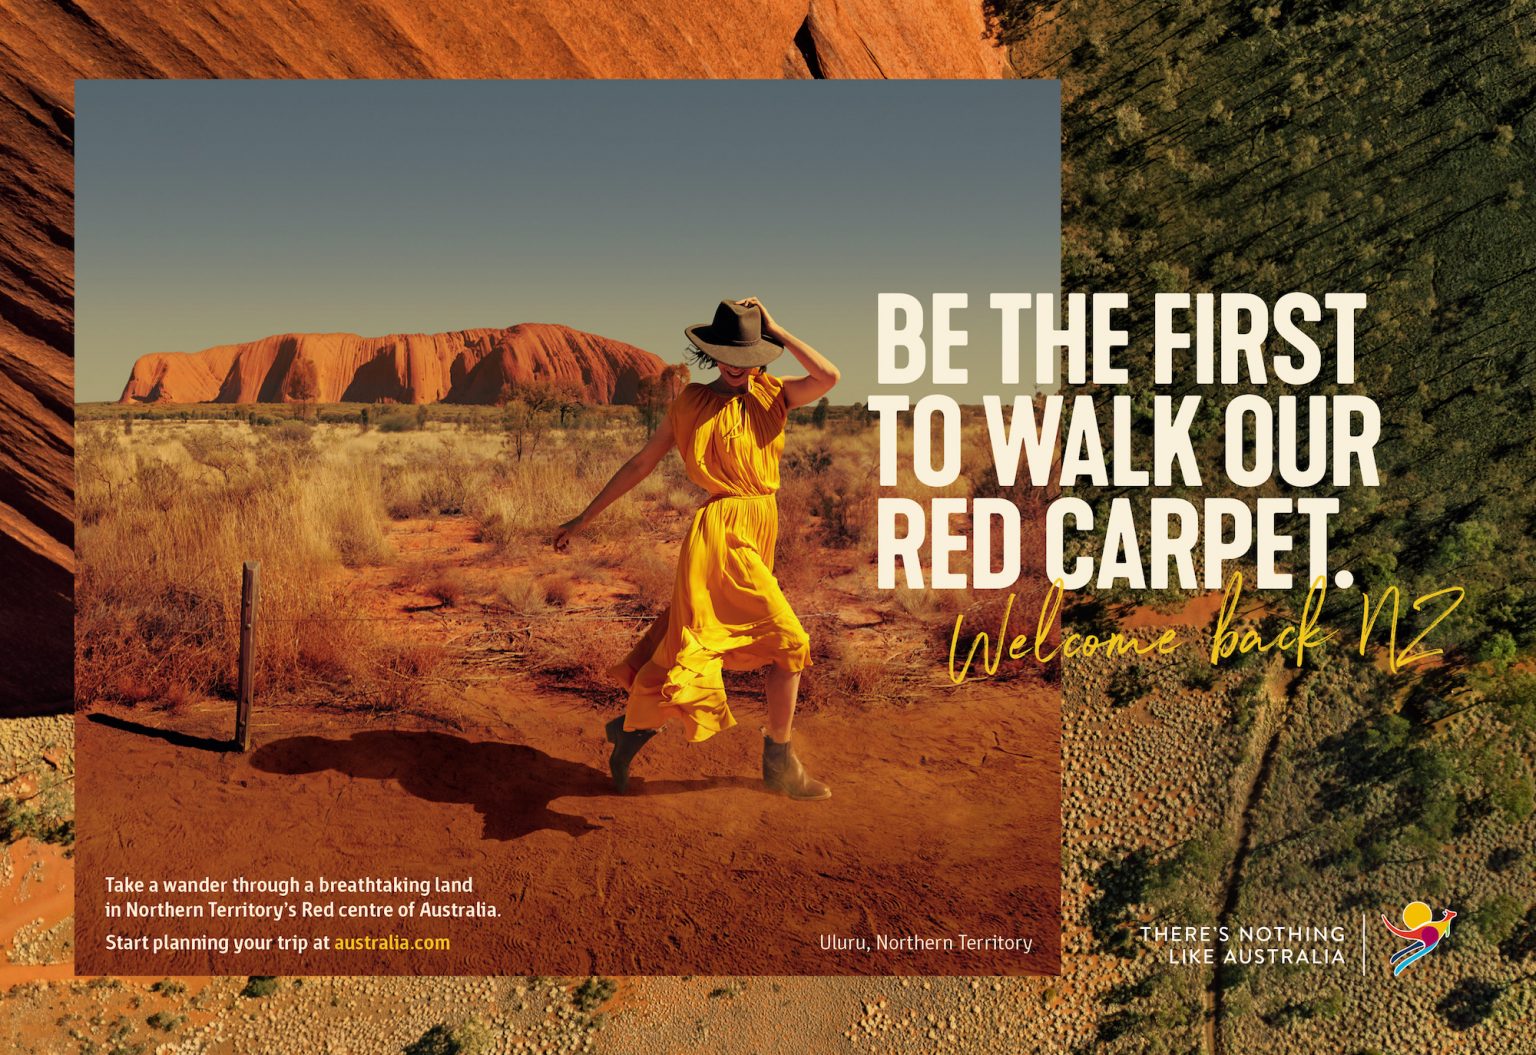 australian tourism advertising campaign